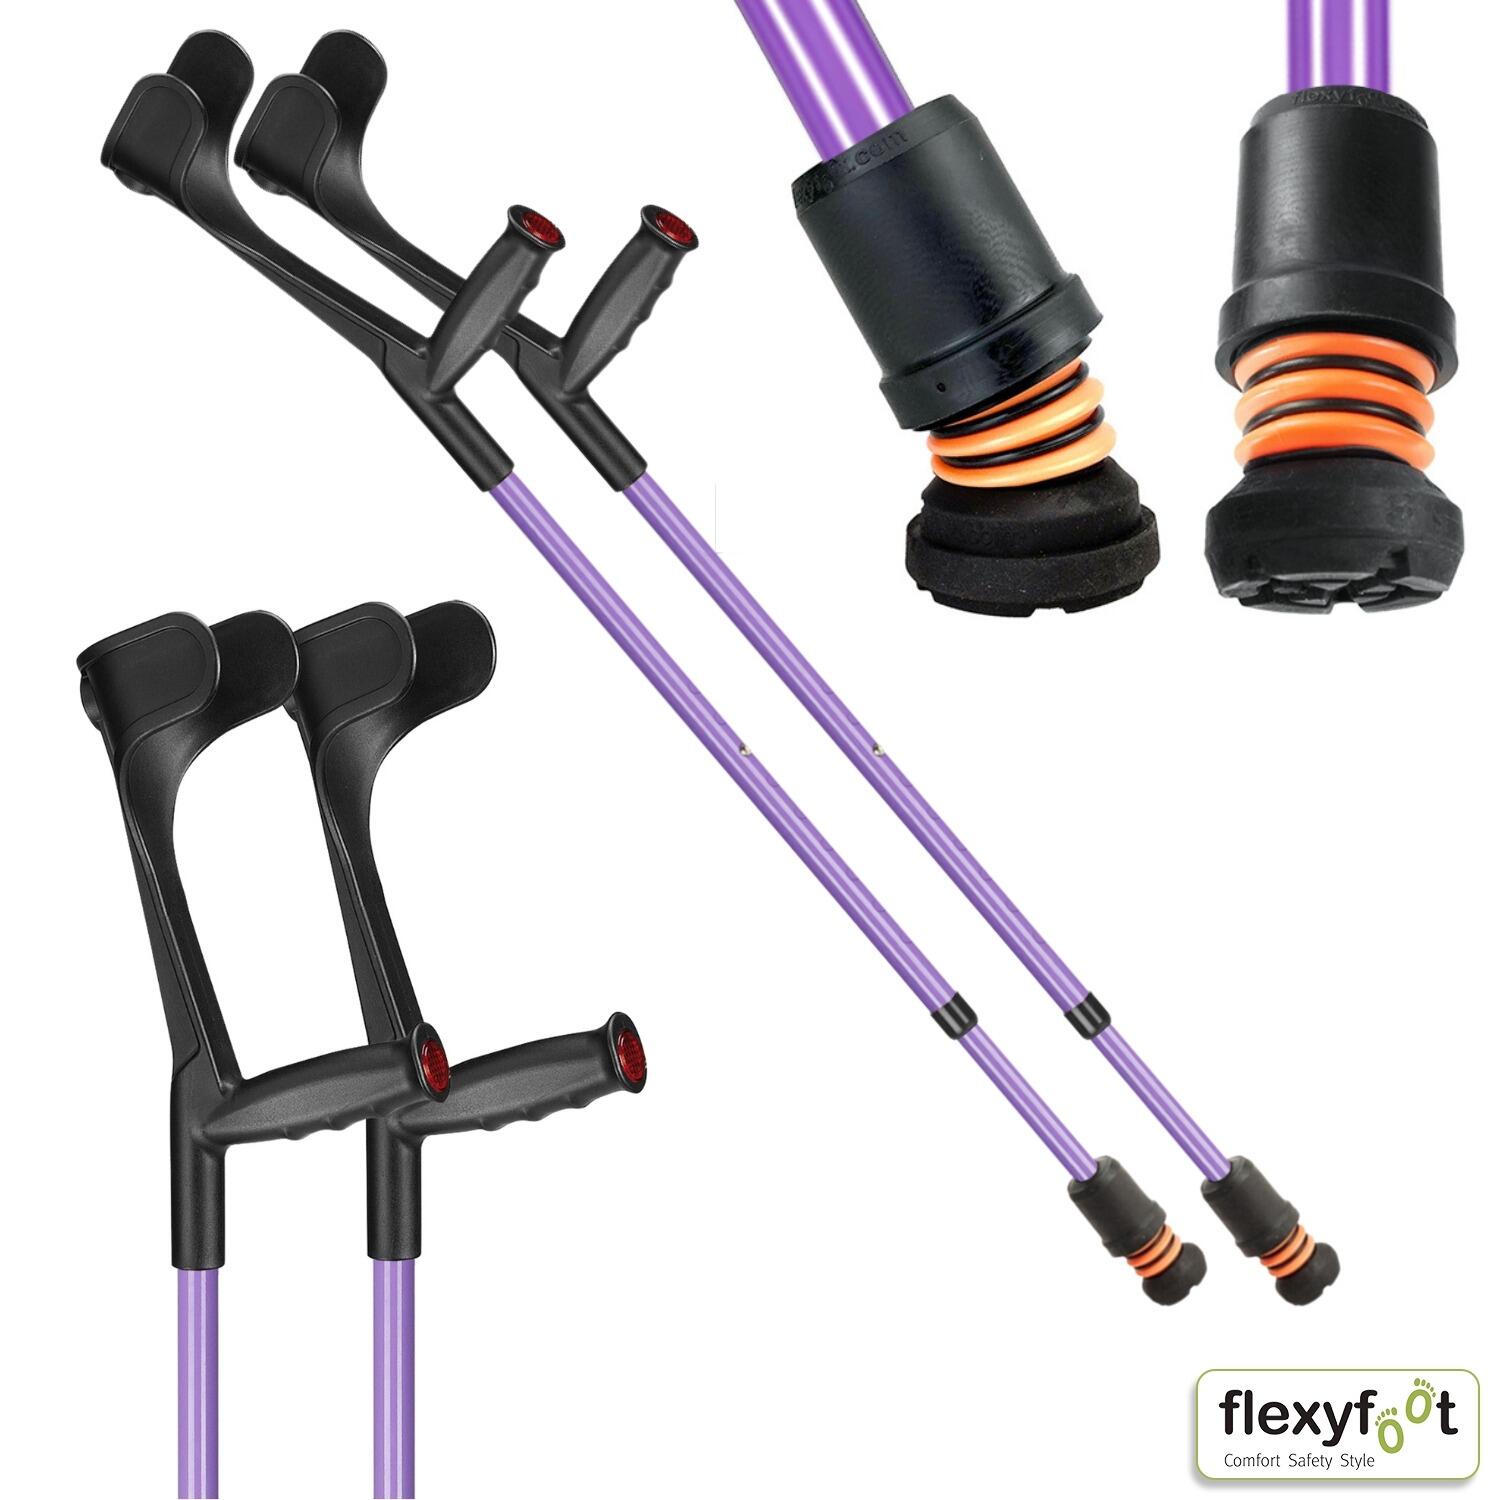 A pair of lilac Flexyfoot Soft Grip Open Cuff Crutches